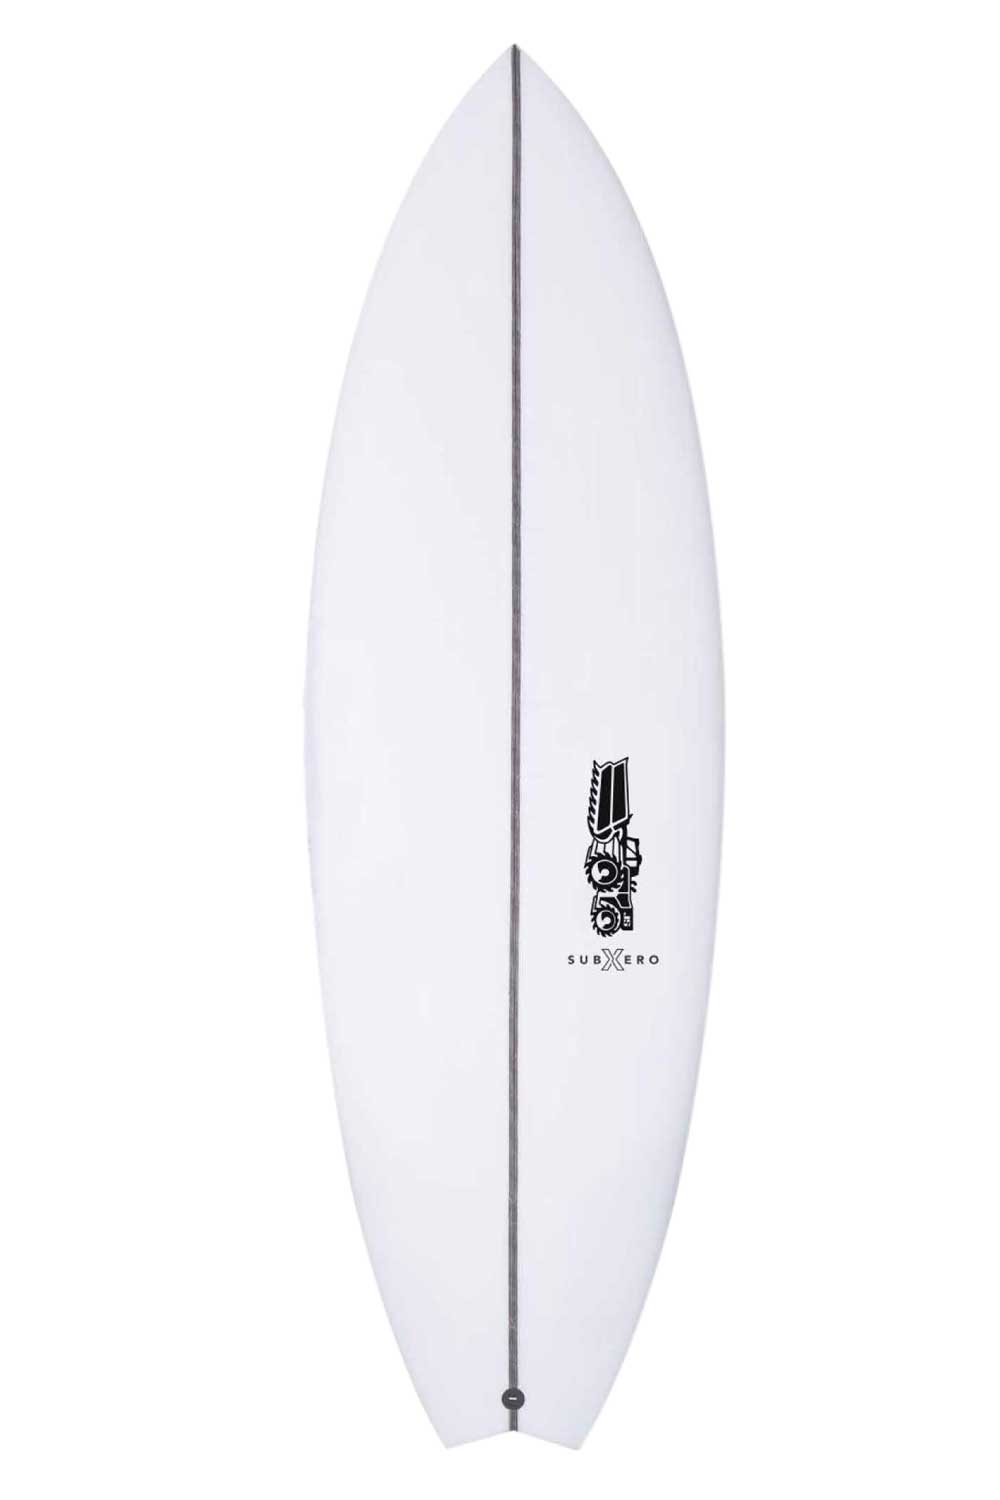 Js surf board - サーフィン